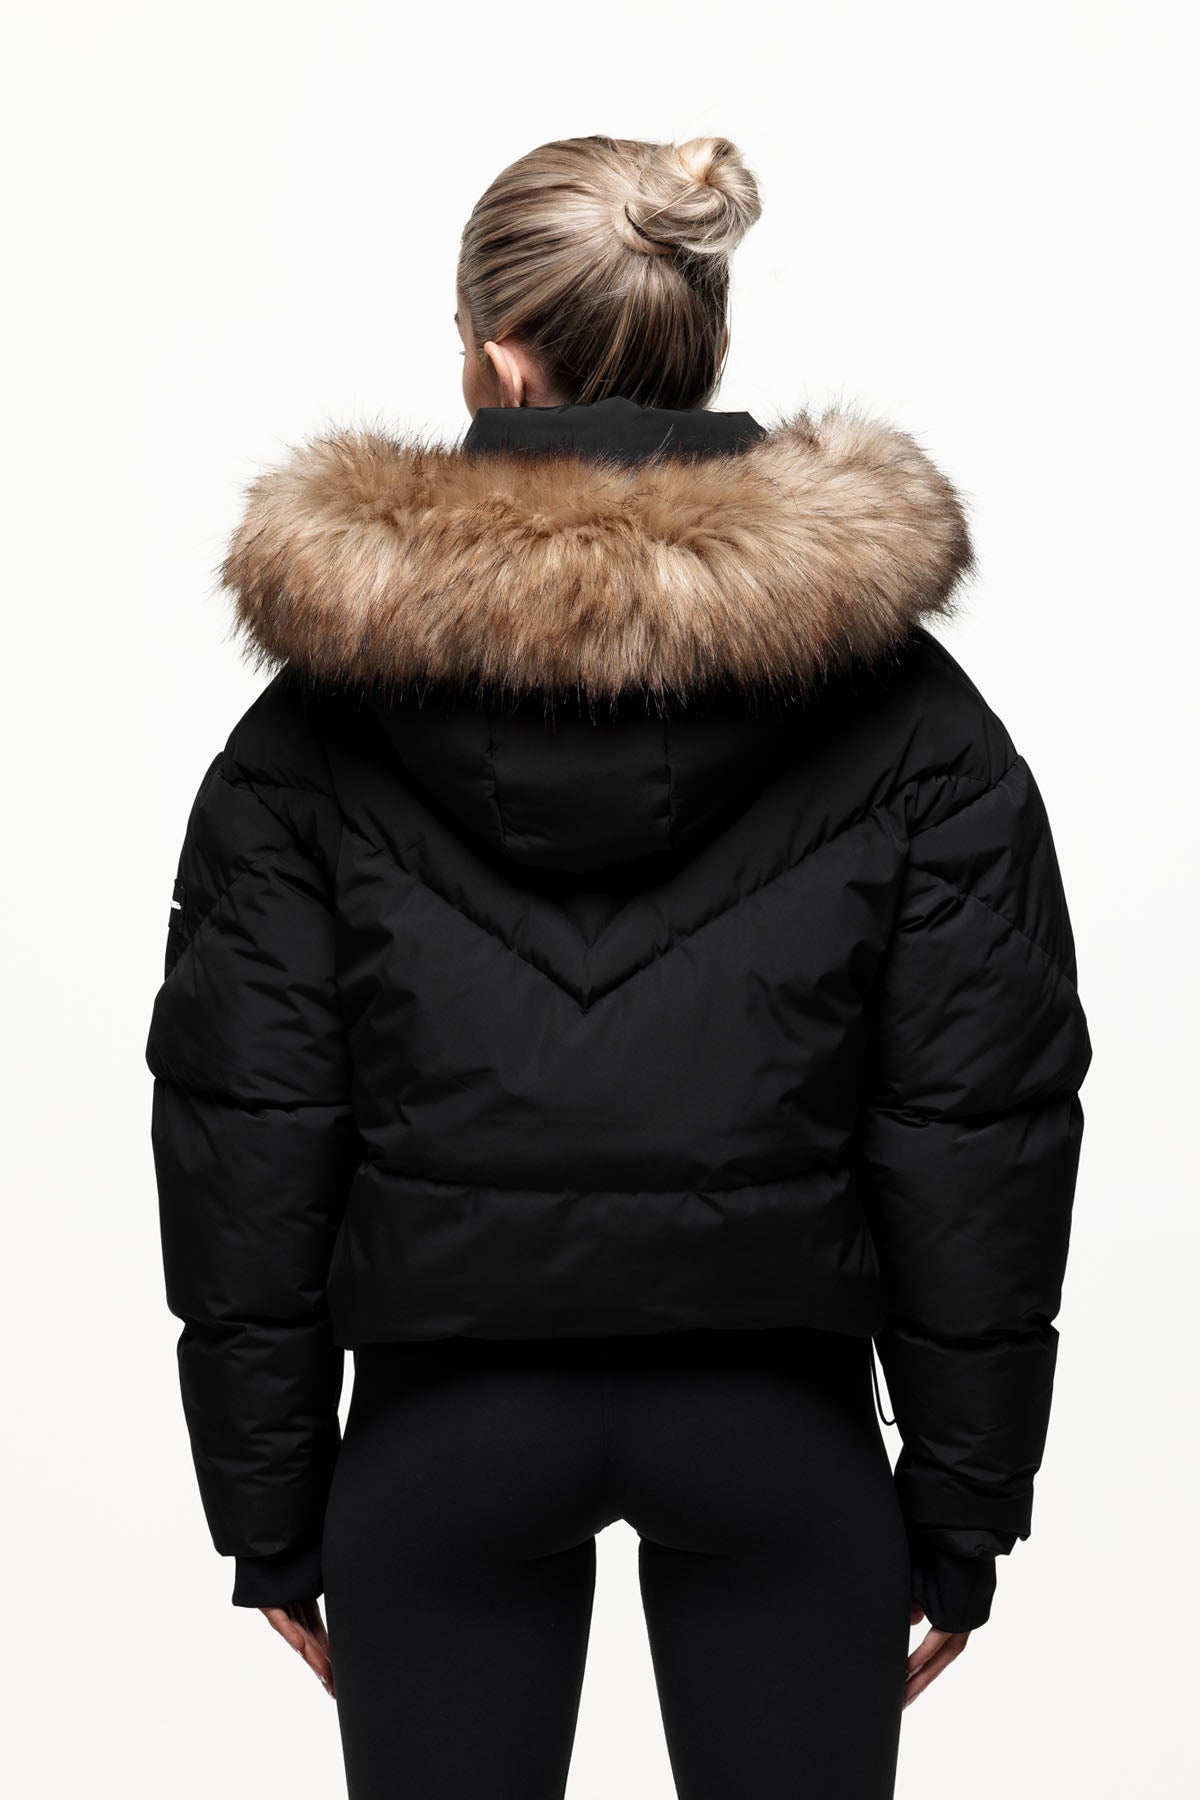 Alps Faux Fur Black Puffer Jacket